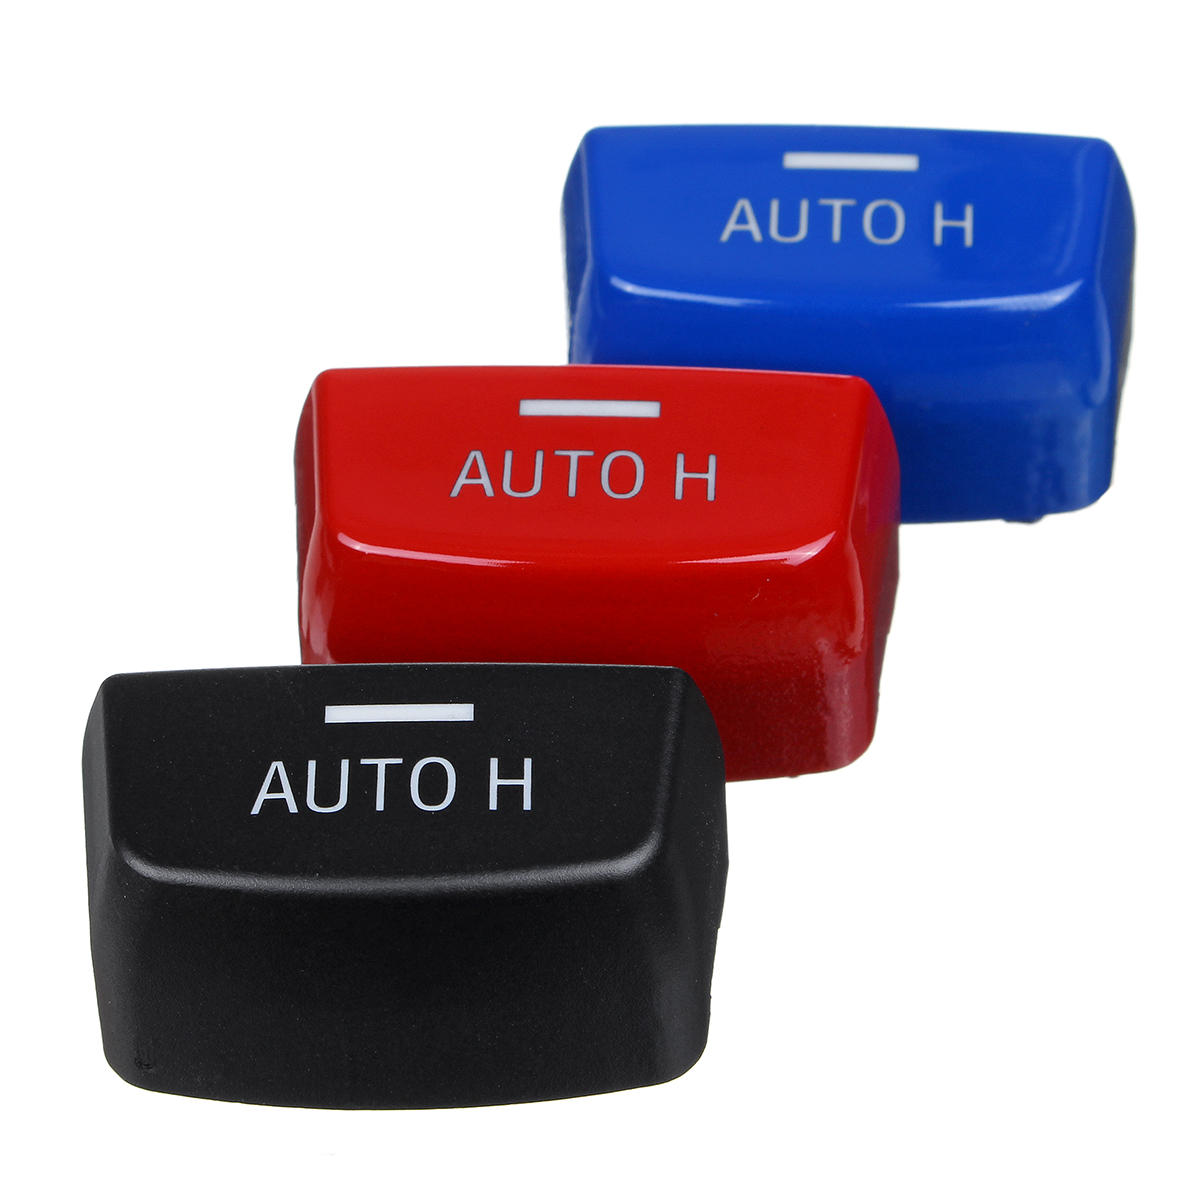 

Car Styling Central Handbrake Auto H Button Cover Sticker Trim For BMW 5/6/7 Series F10 GT F07 X3 F25 X4 F26 X5 X6 09-17